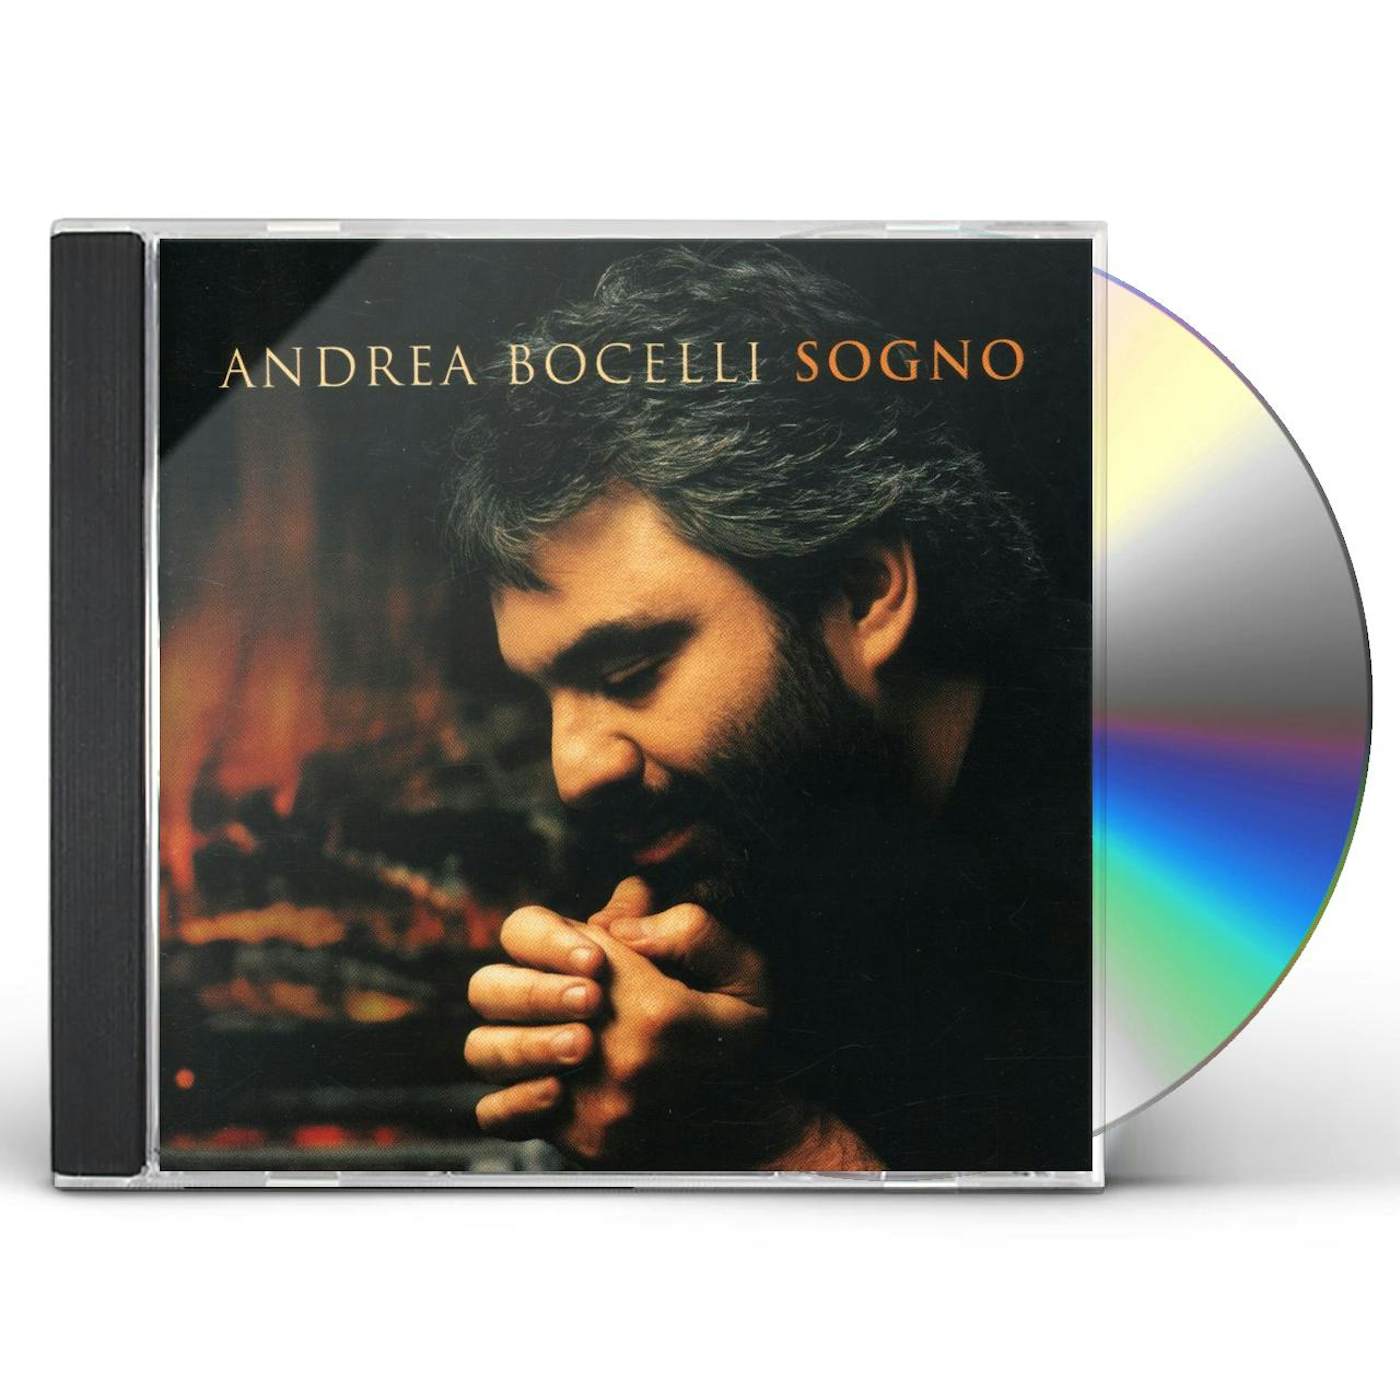 Andrea Bocelli SOGNO CD